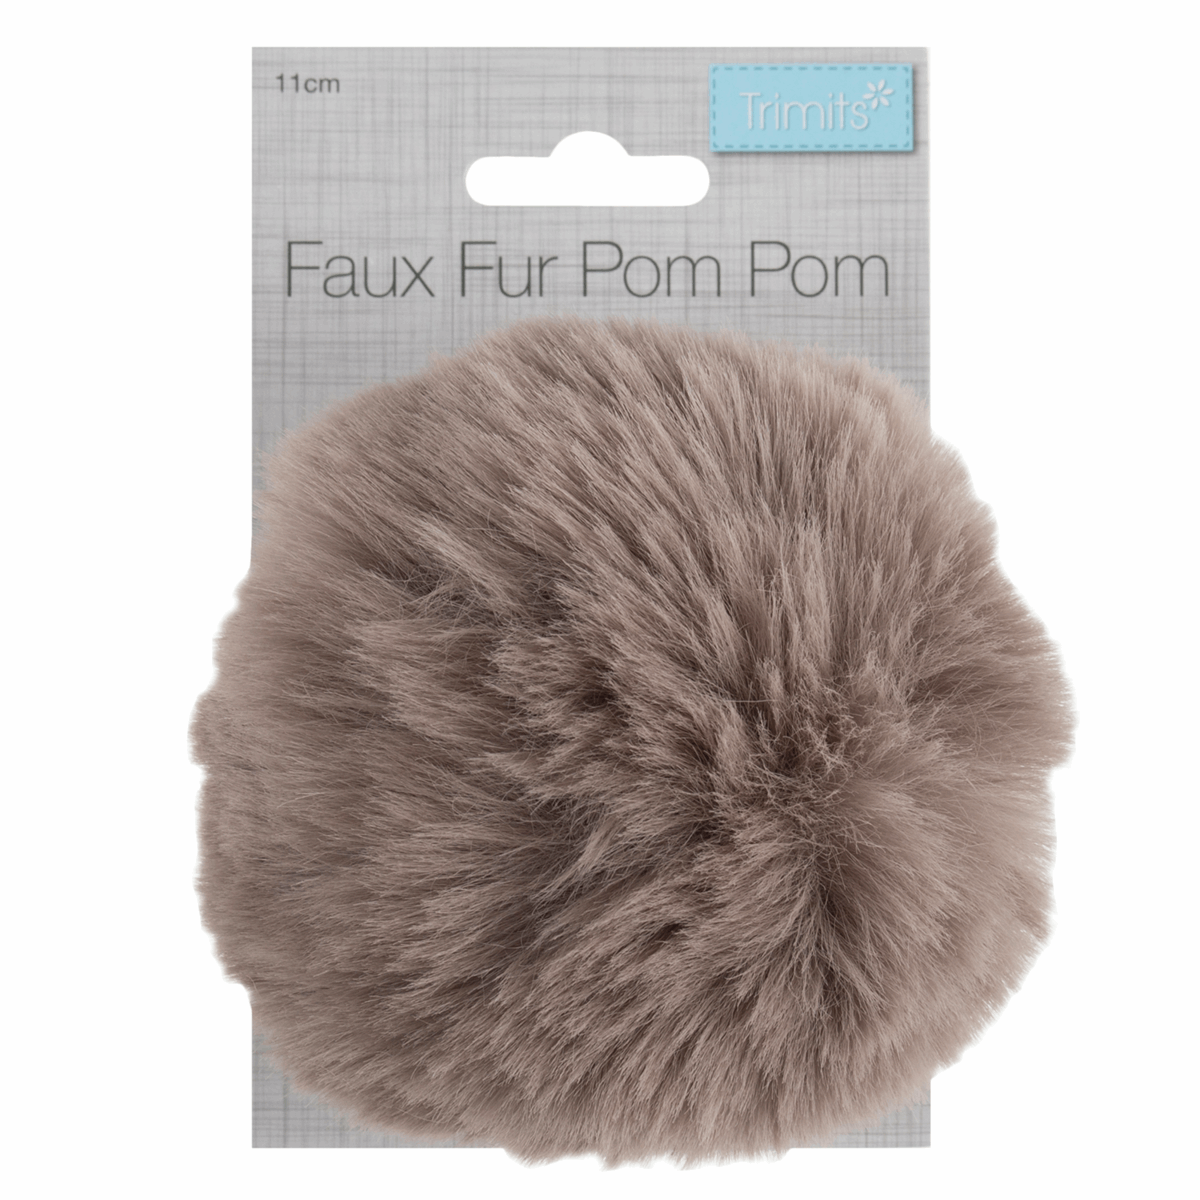 Trimits Faux Fur Super Fluffy Pom Pom - Mink 11cm